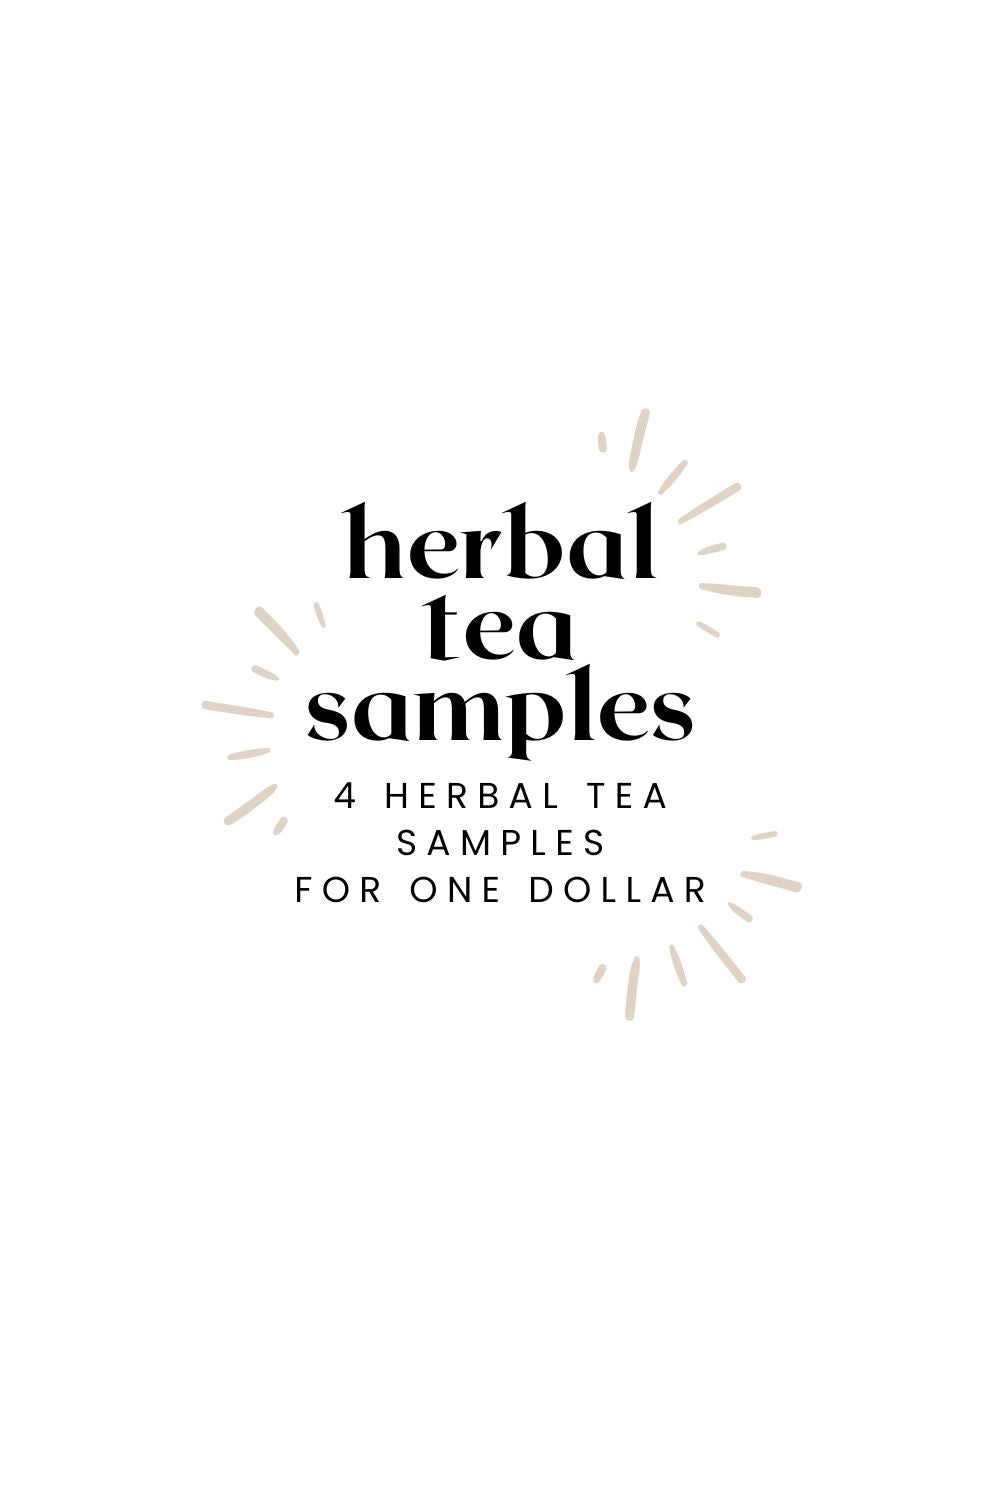 Herbal Tea Samples for $1